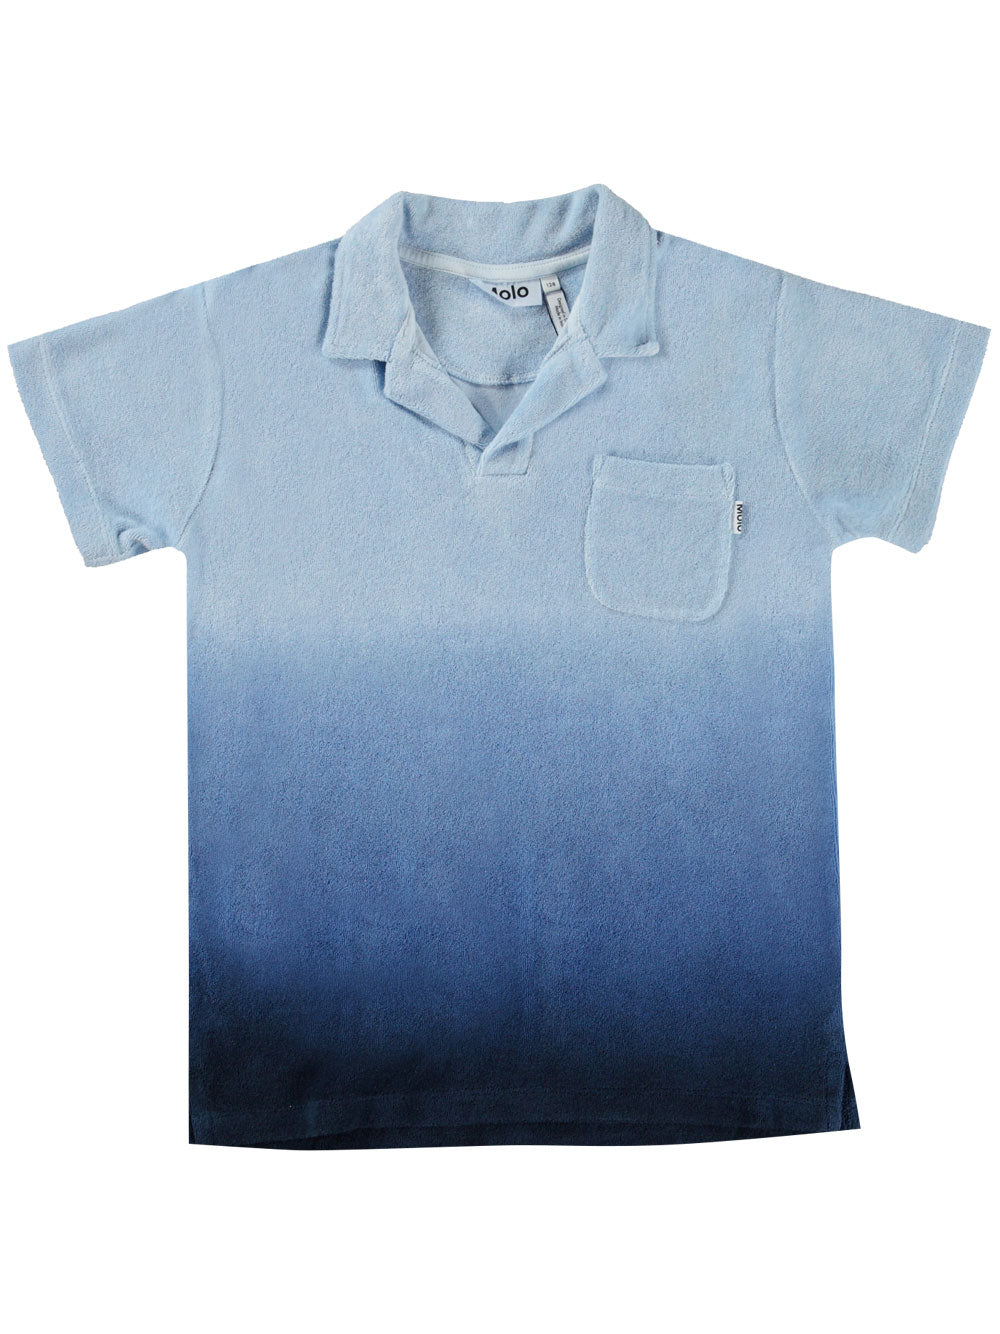 Randel Reef Blue T-Shirt